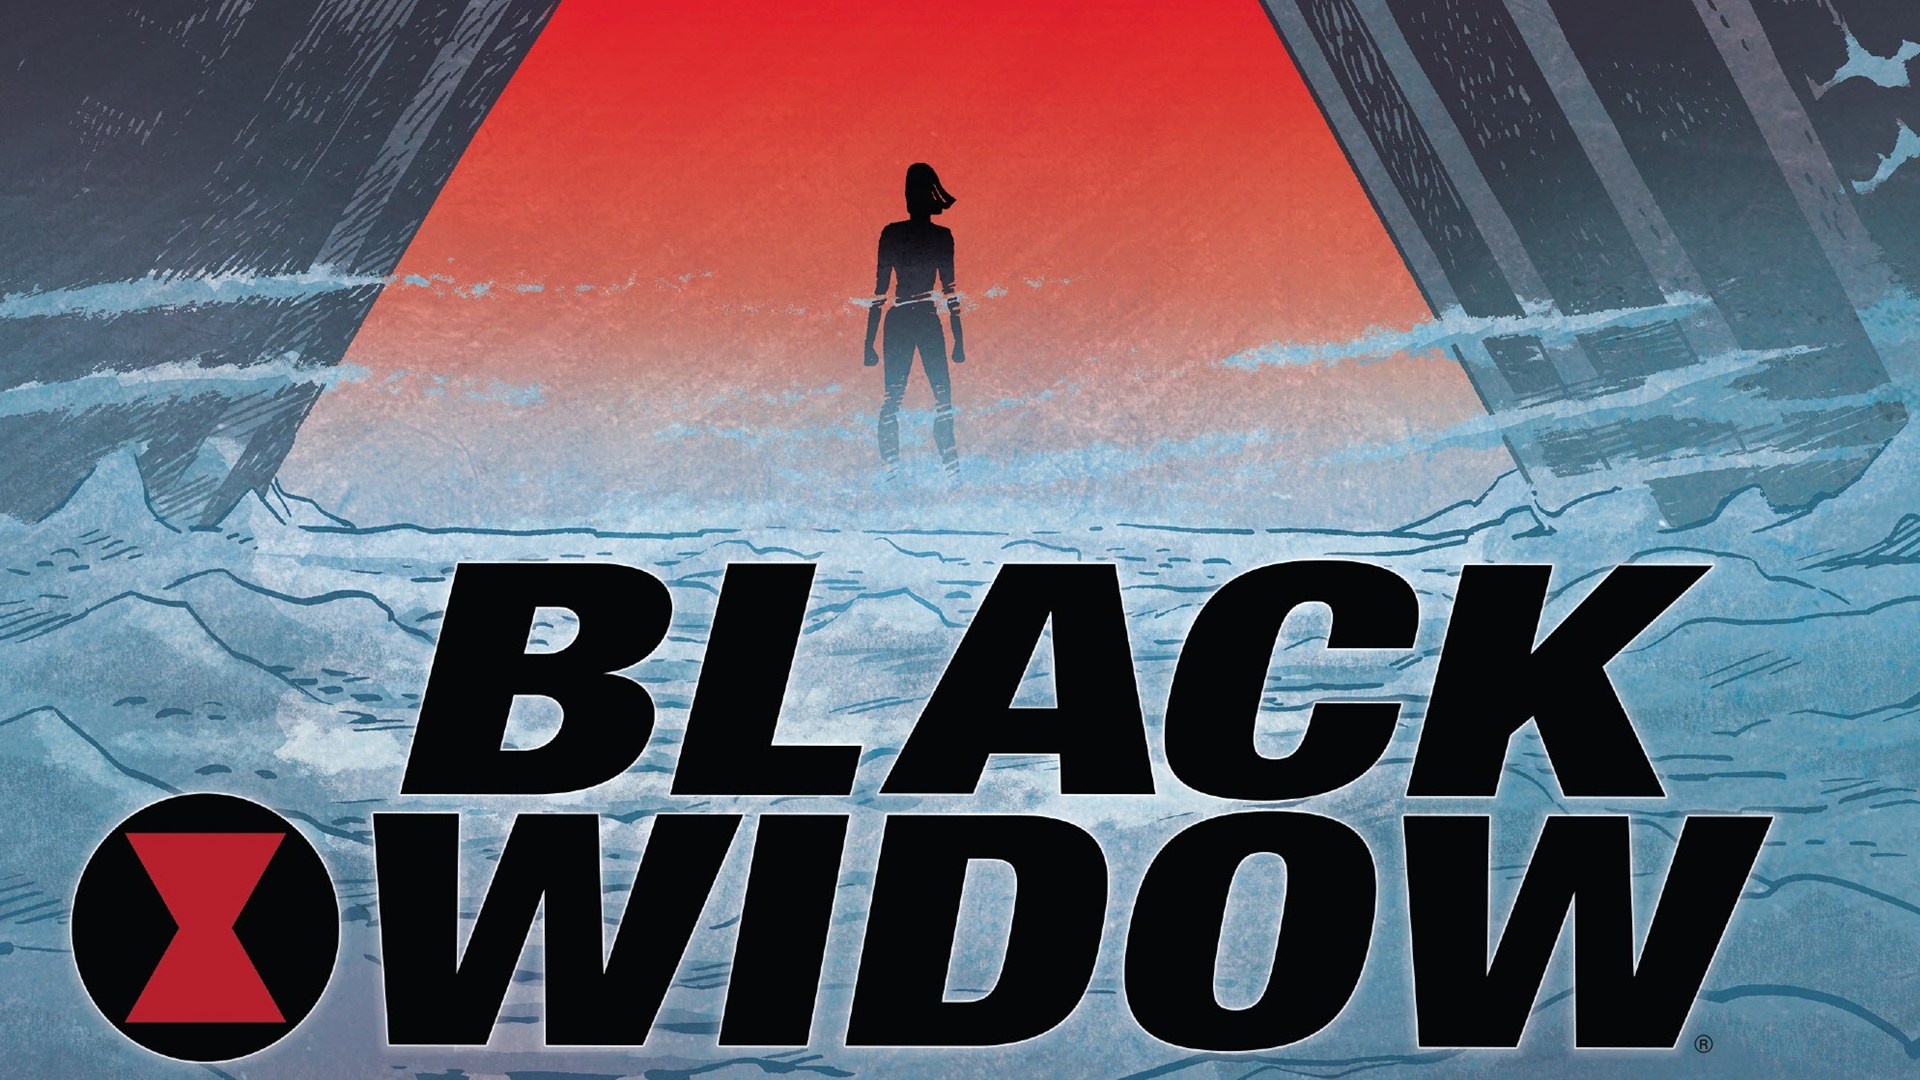 Marvel Black Widow Background Hd Wallpapers - Poster - HD Wallpaper 